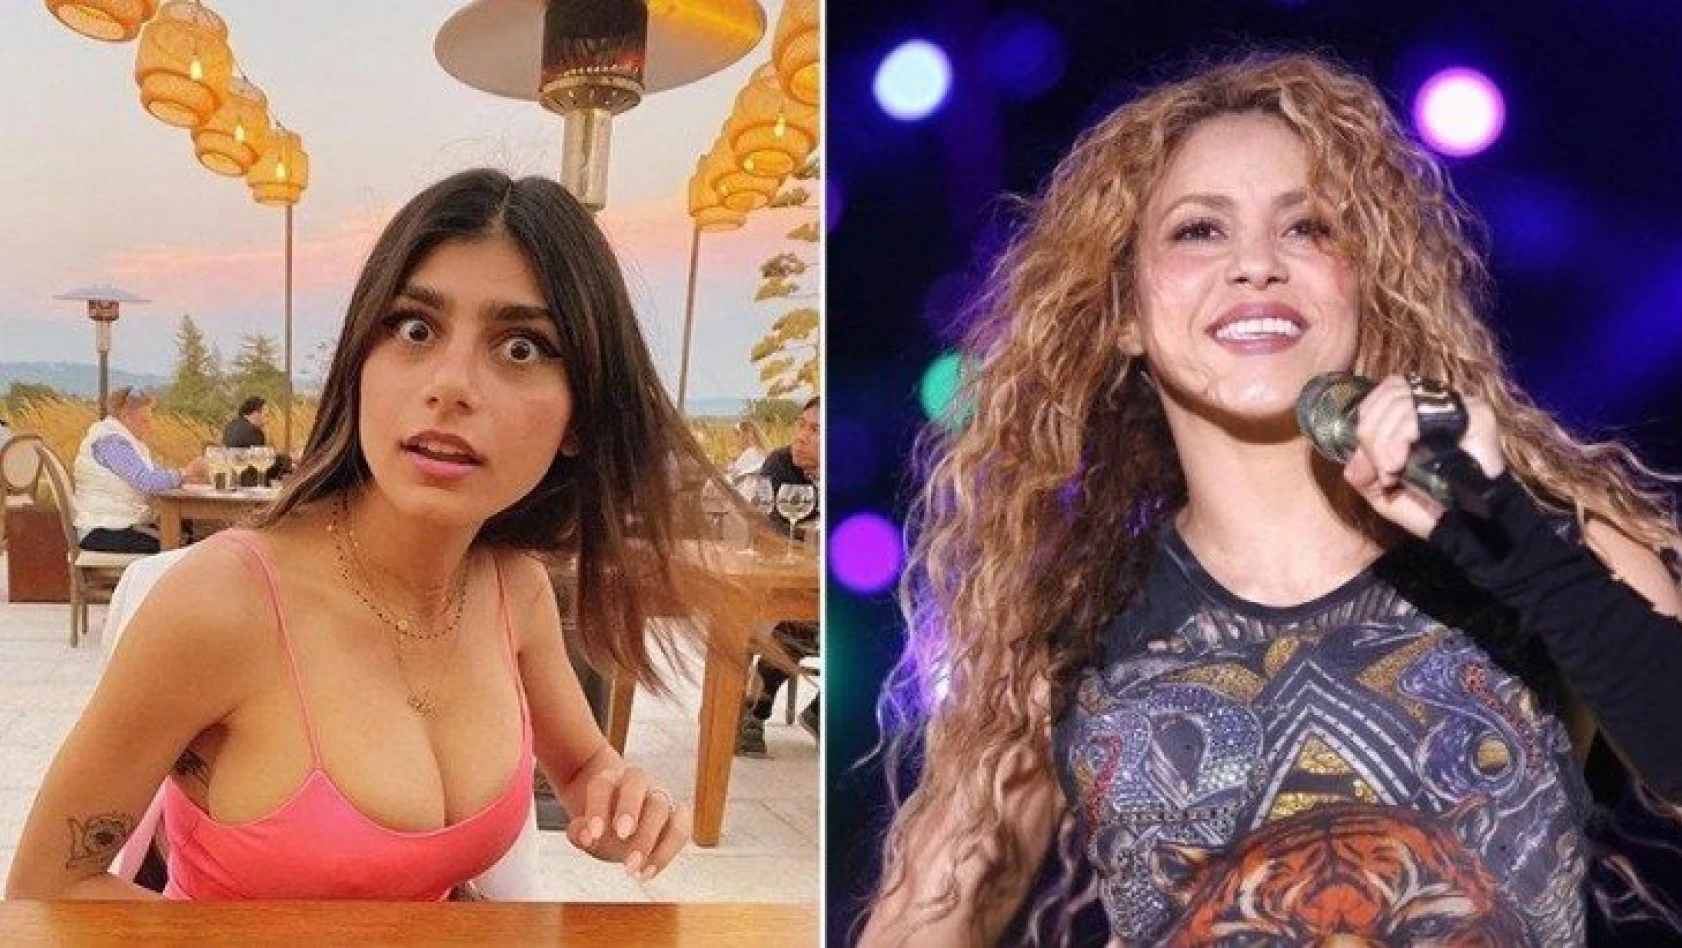 Porno yıldızı Mia Khalifa, Shakira'ya isyan etti